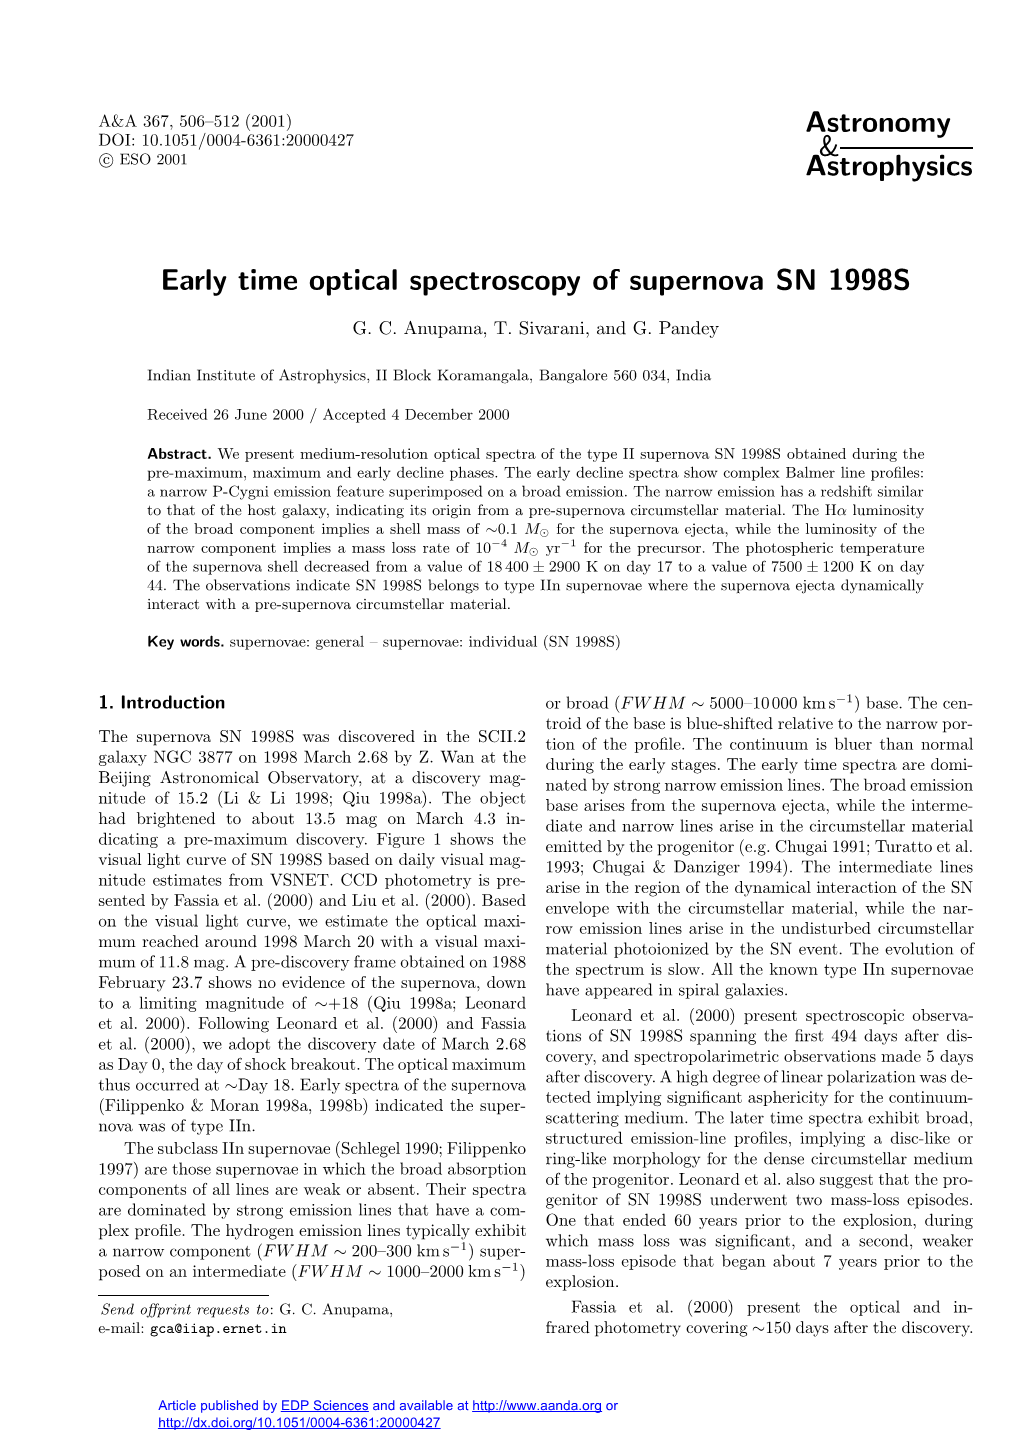 Early Time Optical Spectroscopy of Supernova SN 1998S